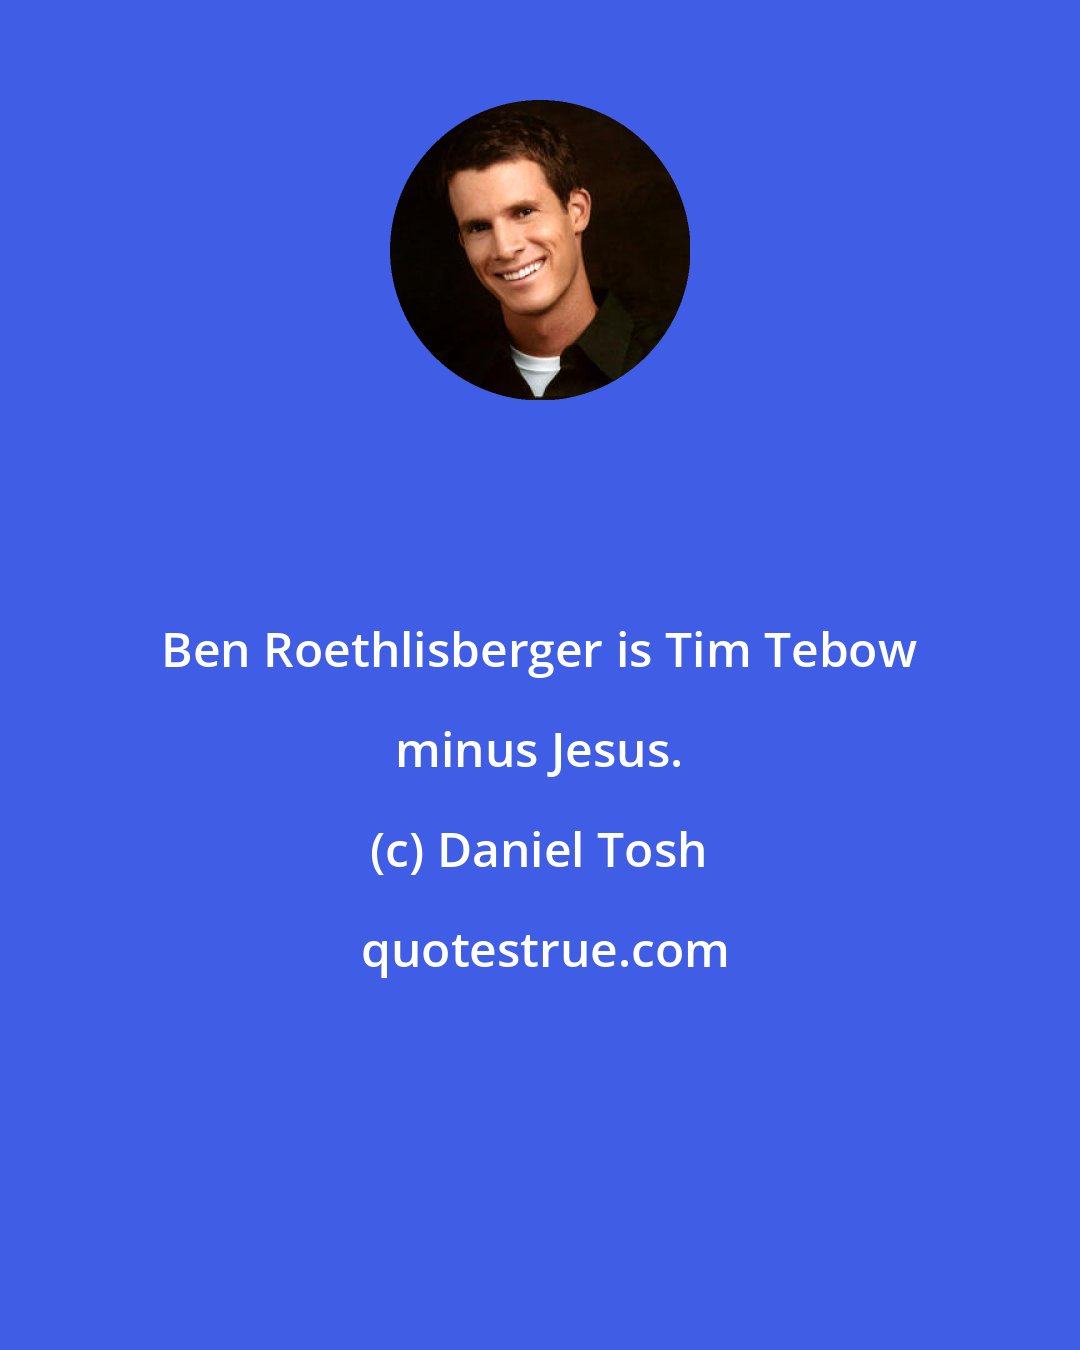 Daniel Tosh: Ben Roethlisberger is Tim Tebow minus Jesus.